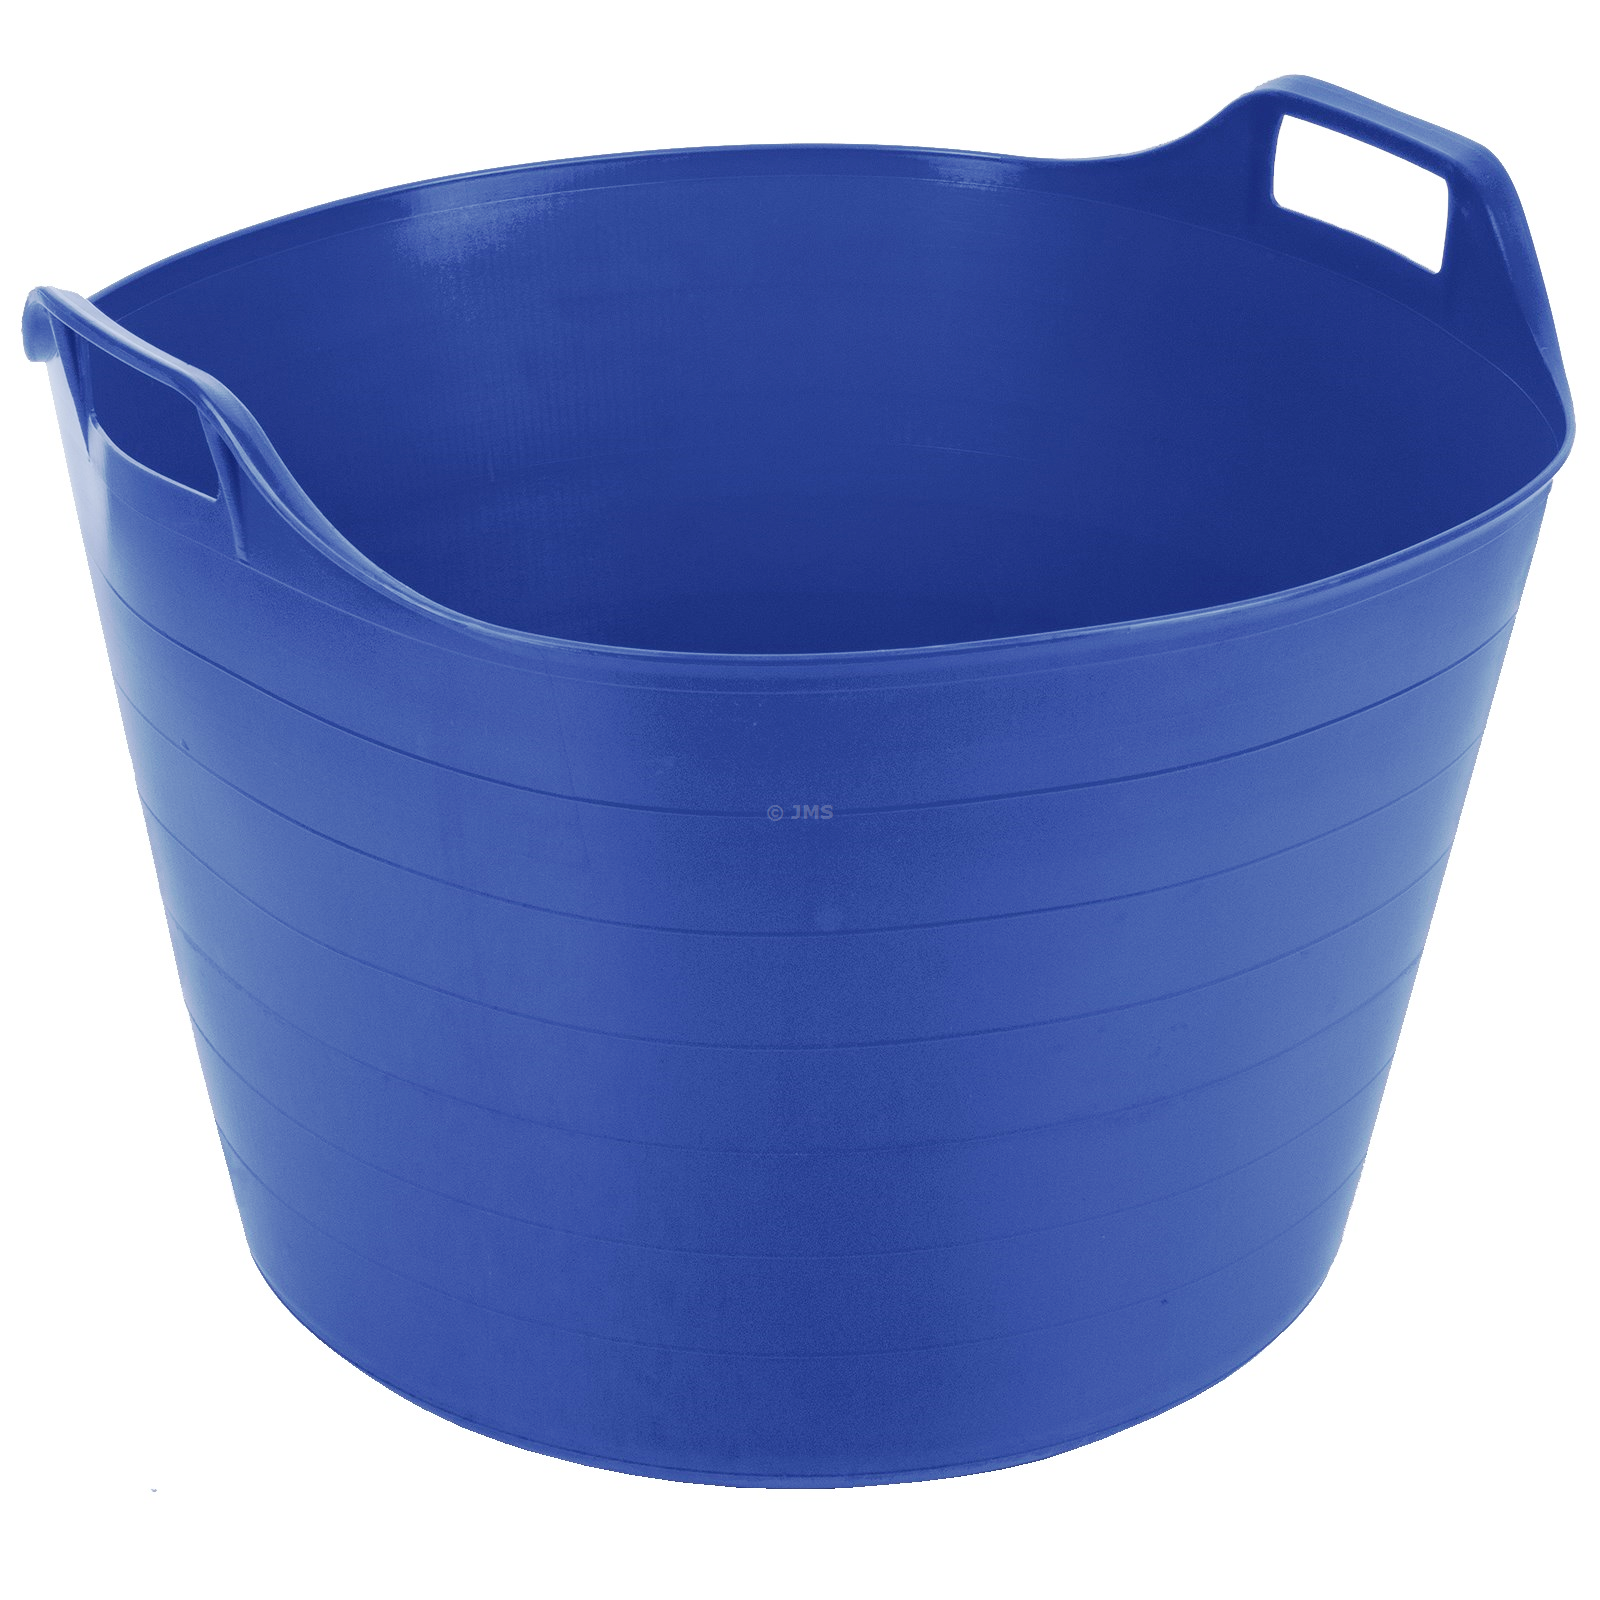  75L BLUE Flexi Tub Extra Large Flexible Storage Builders Bucket Home Garden Animal Feed Storage